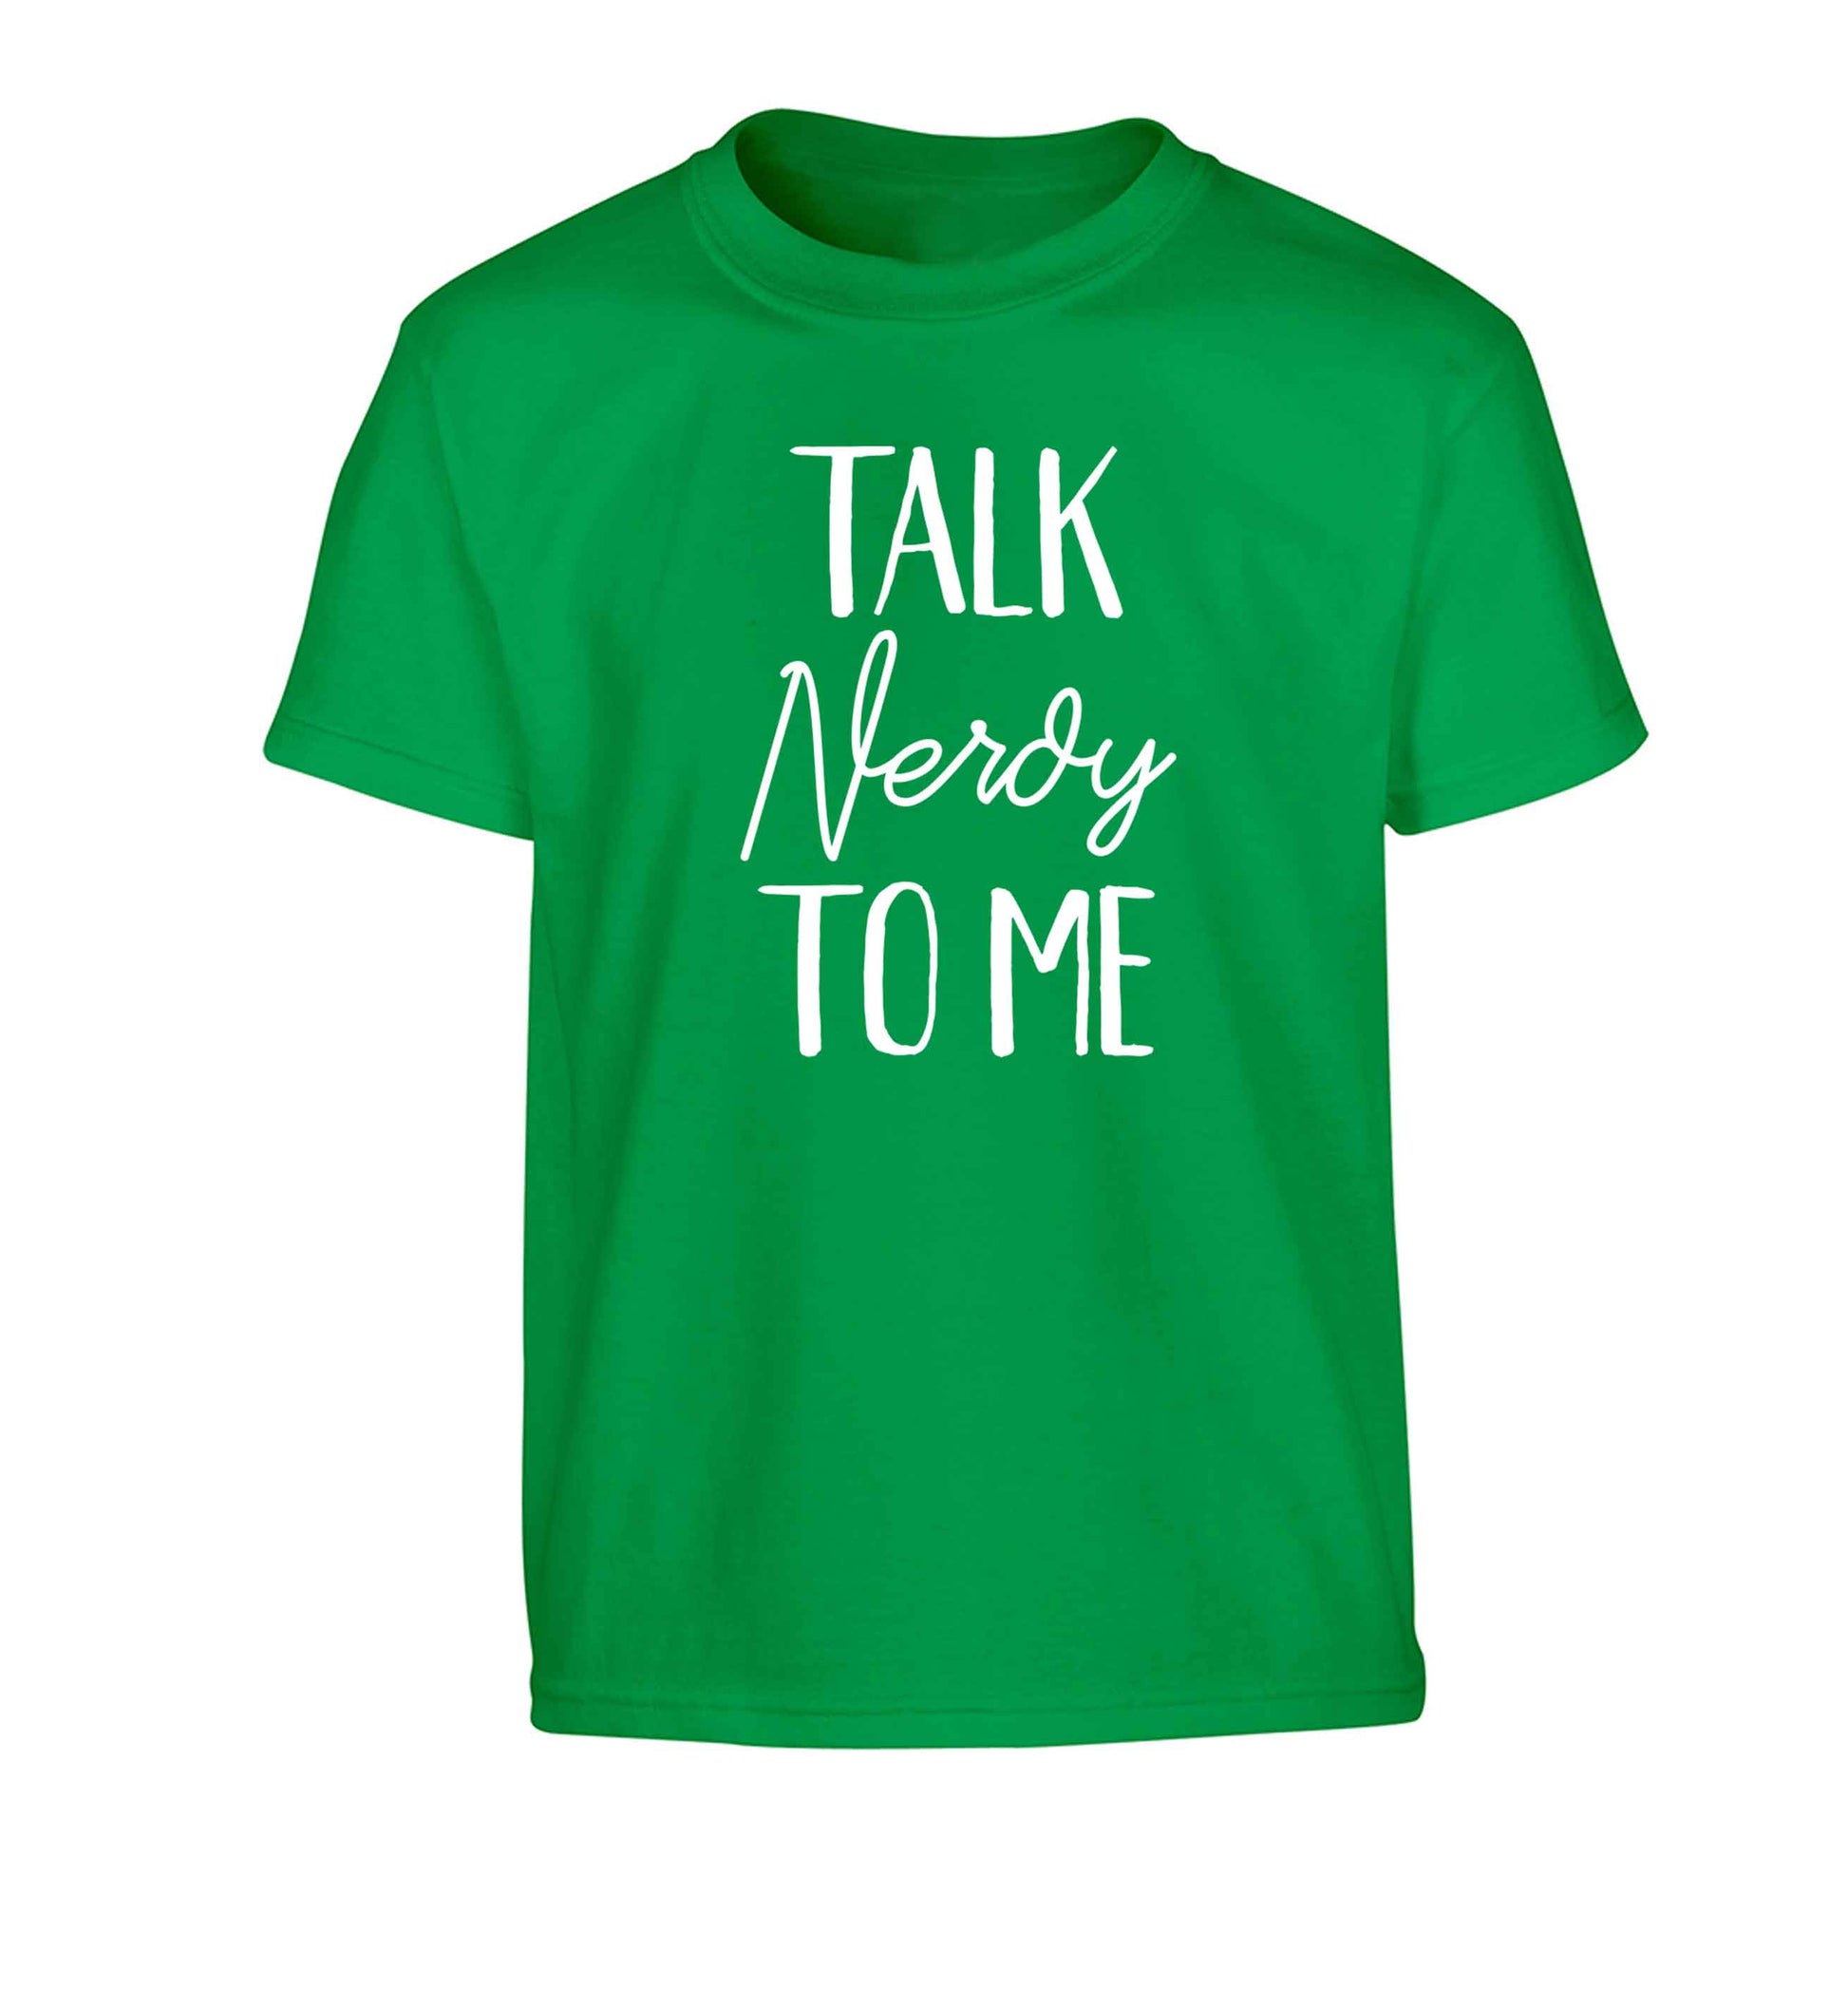 Talk nerdy to me Children's green Tshirt 12-13 Years